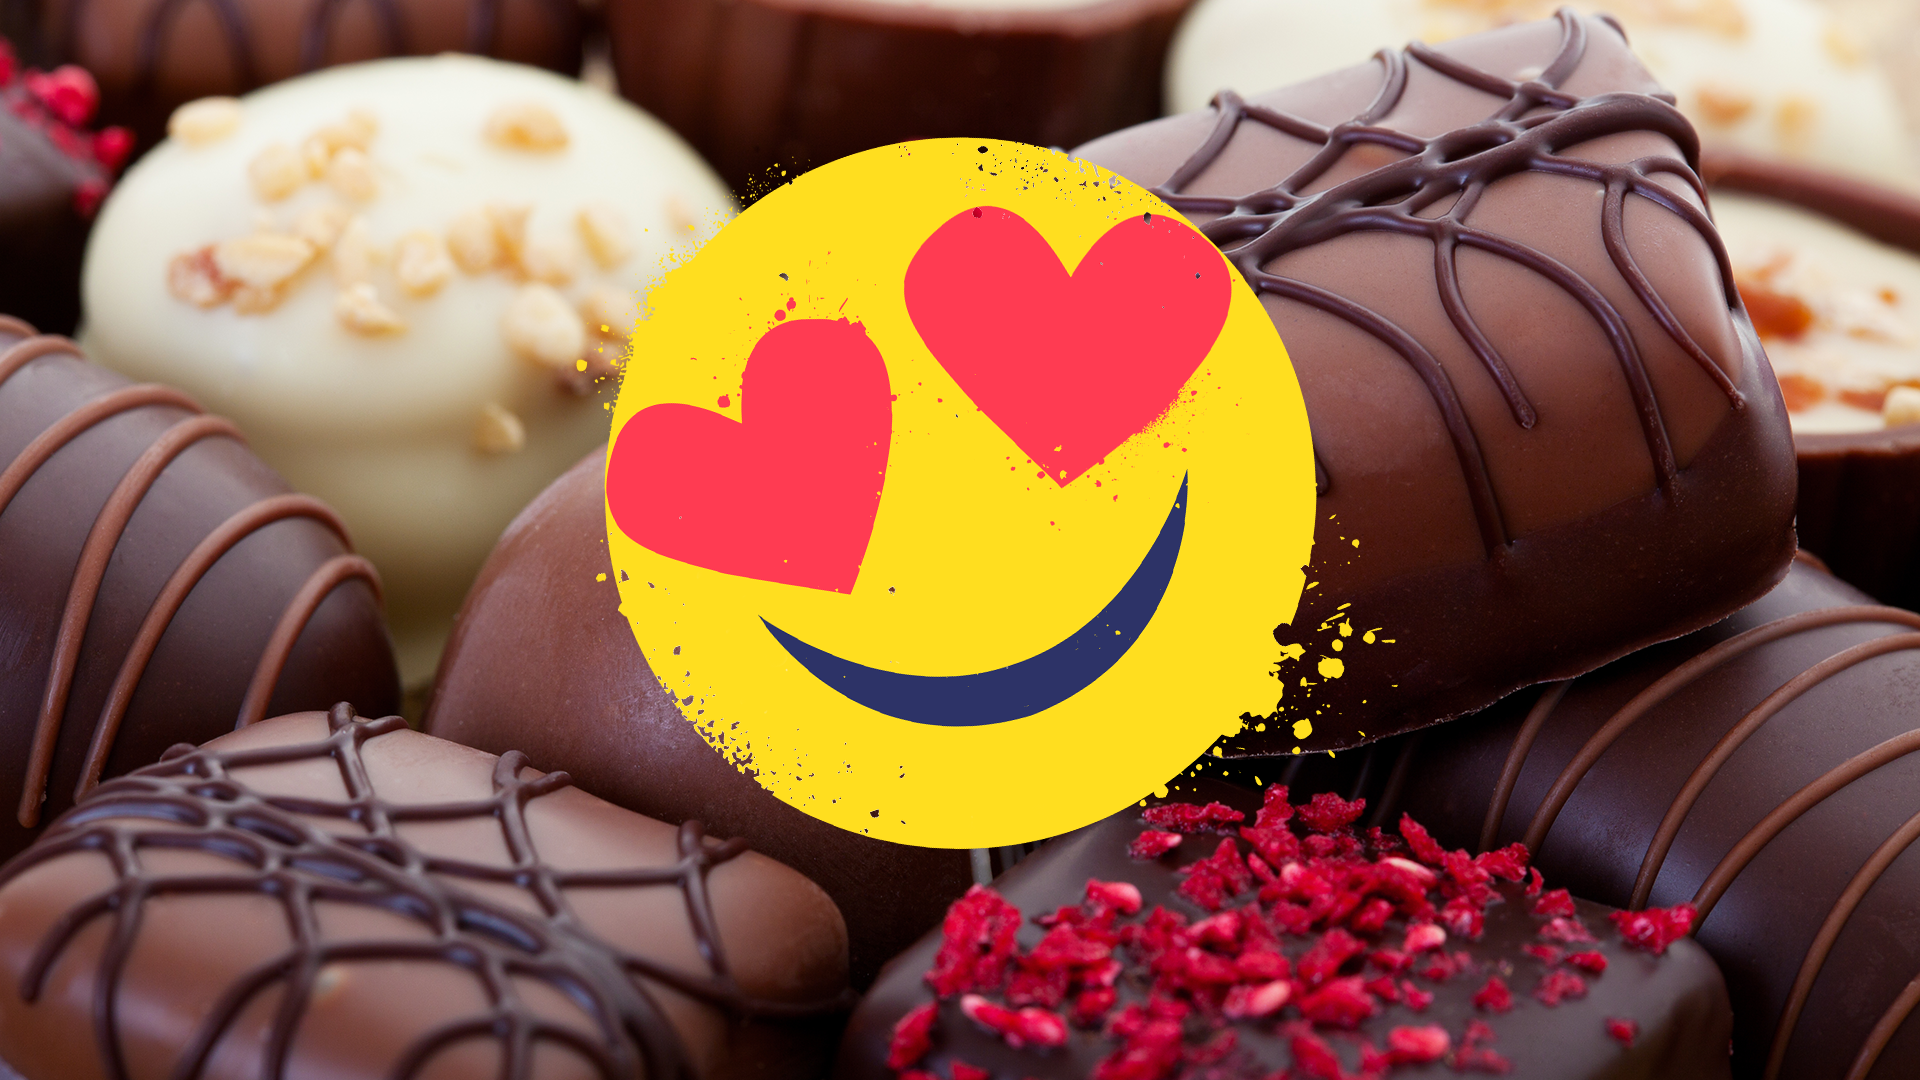 Heart eyes emoji and chocolates